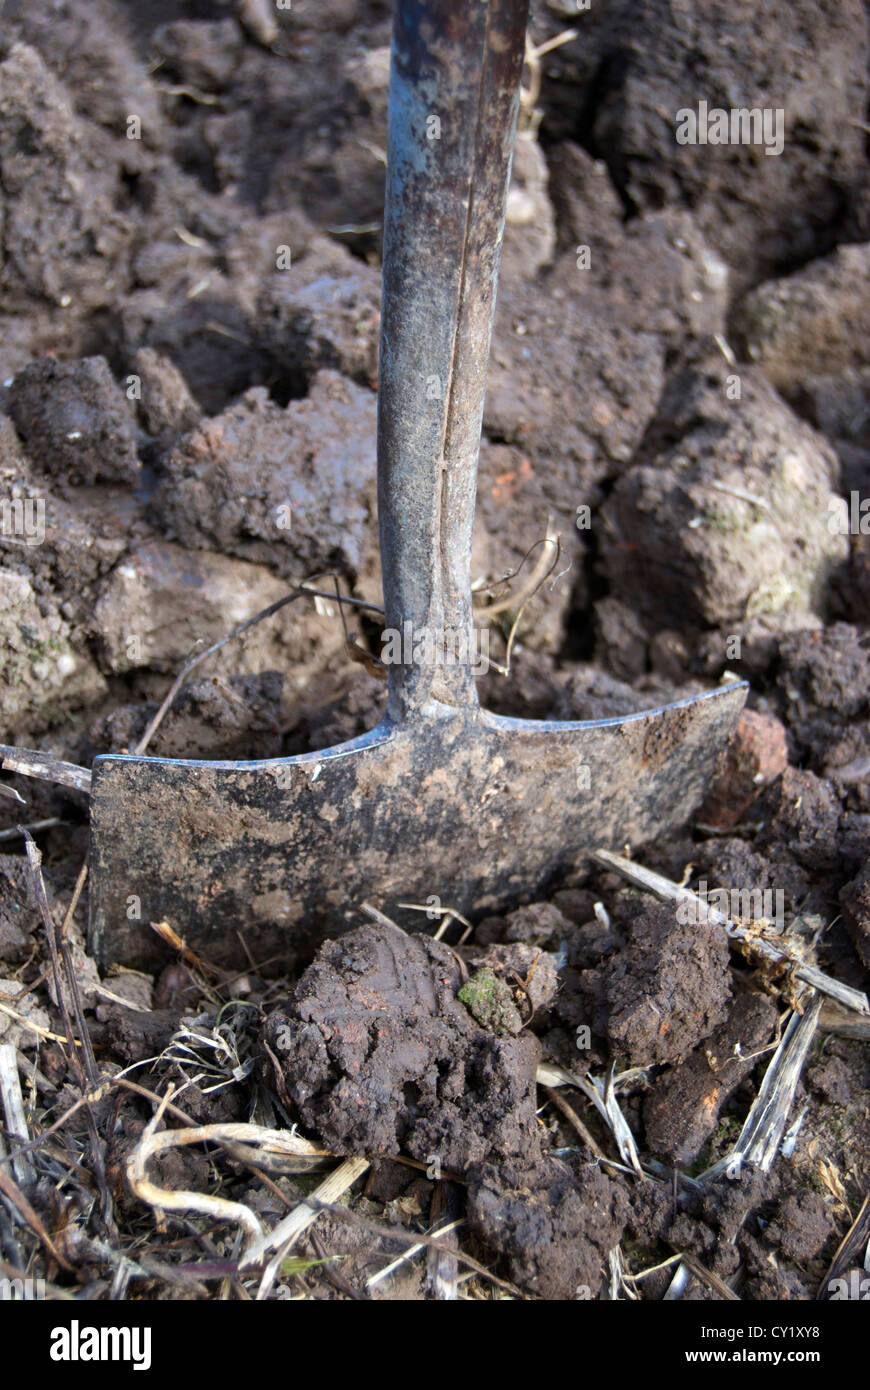 A spade dug into clods of earth Stock Photo